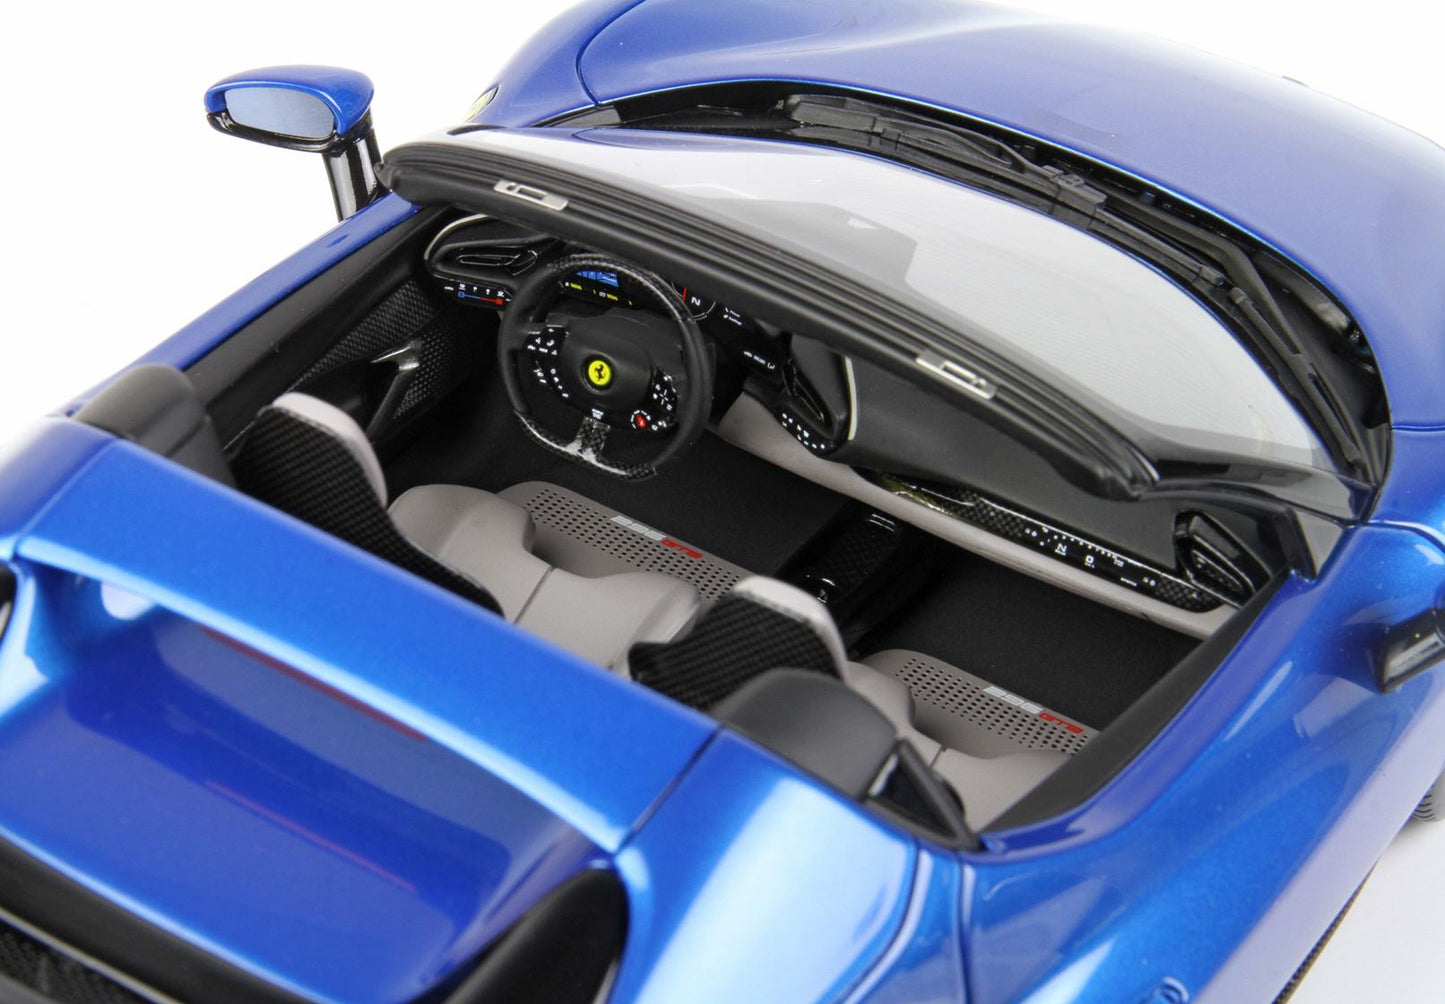 BBR 1/18 Ferrari 296 GTS Rancing blue limited 296pcs